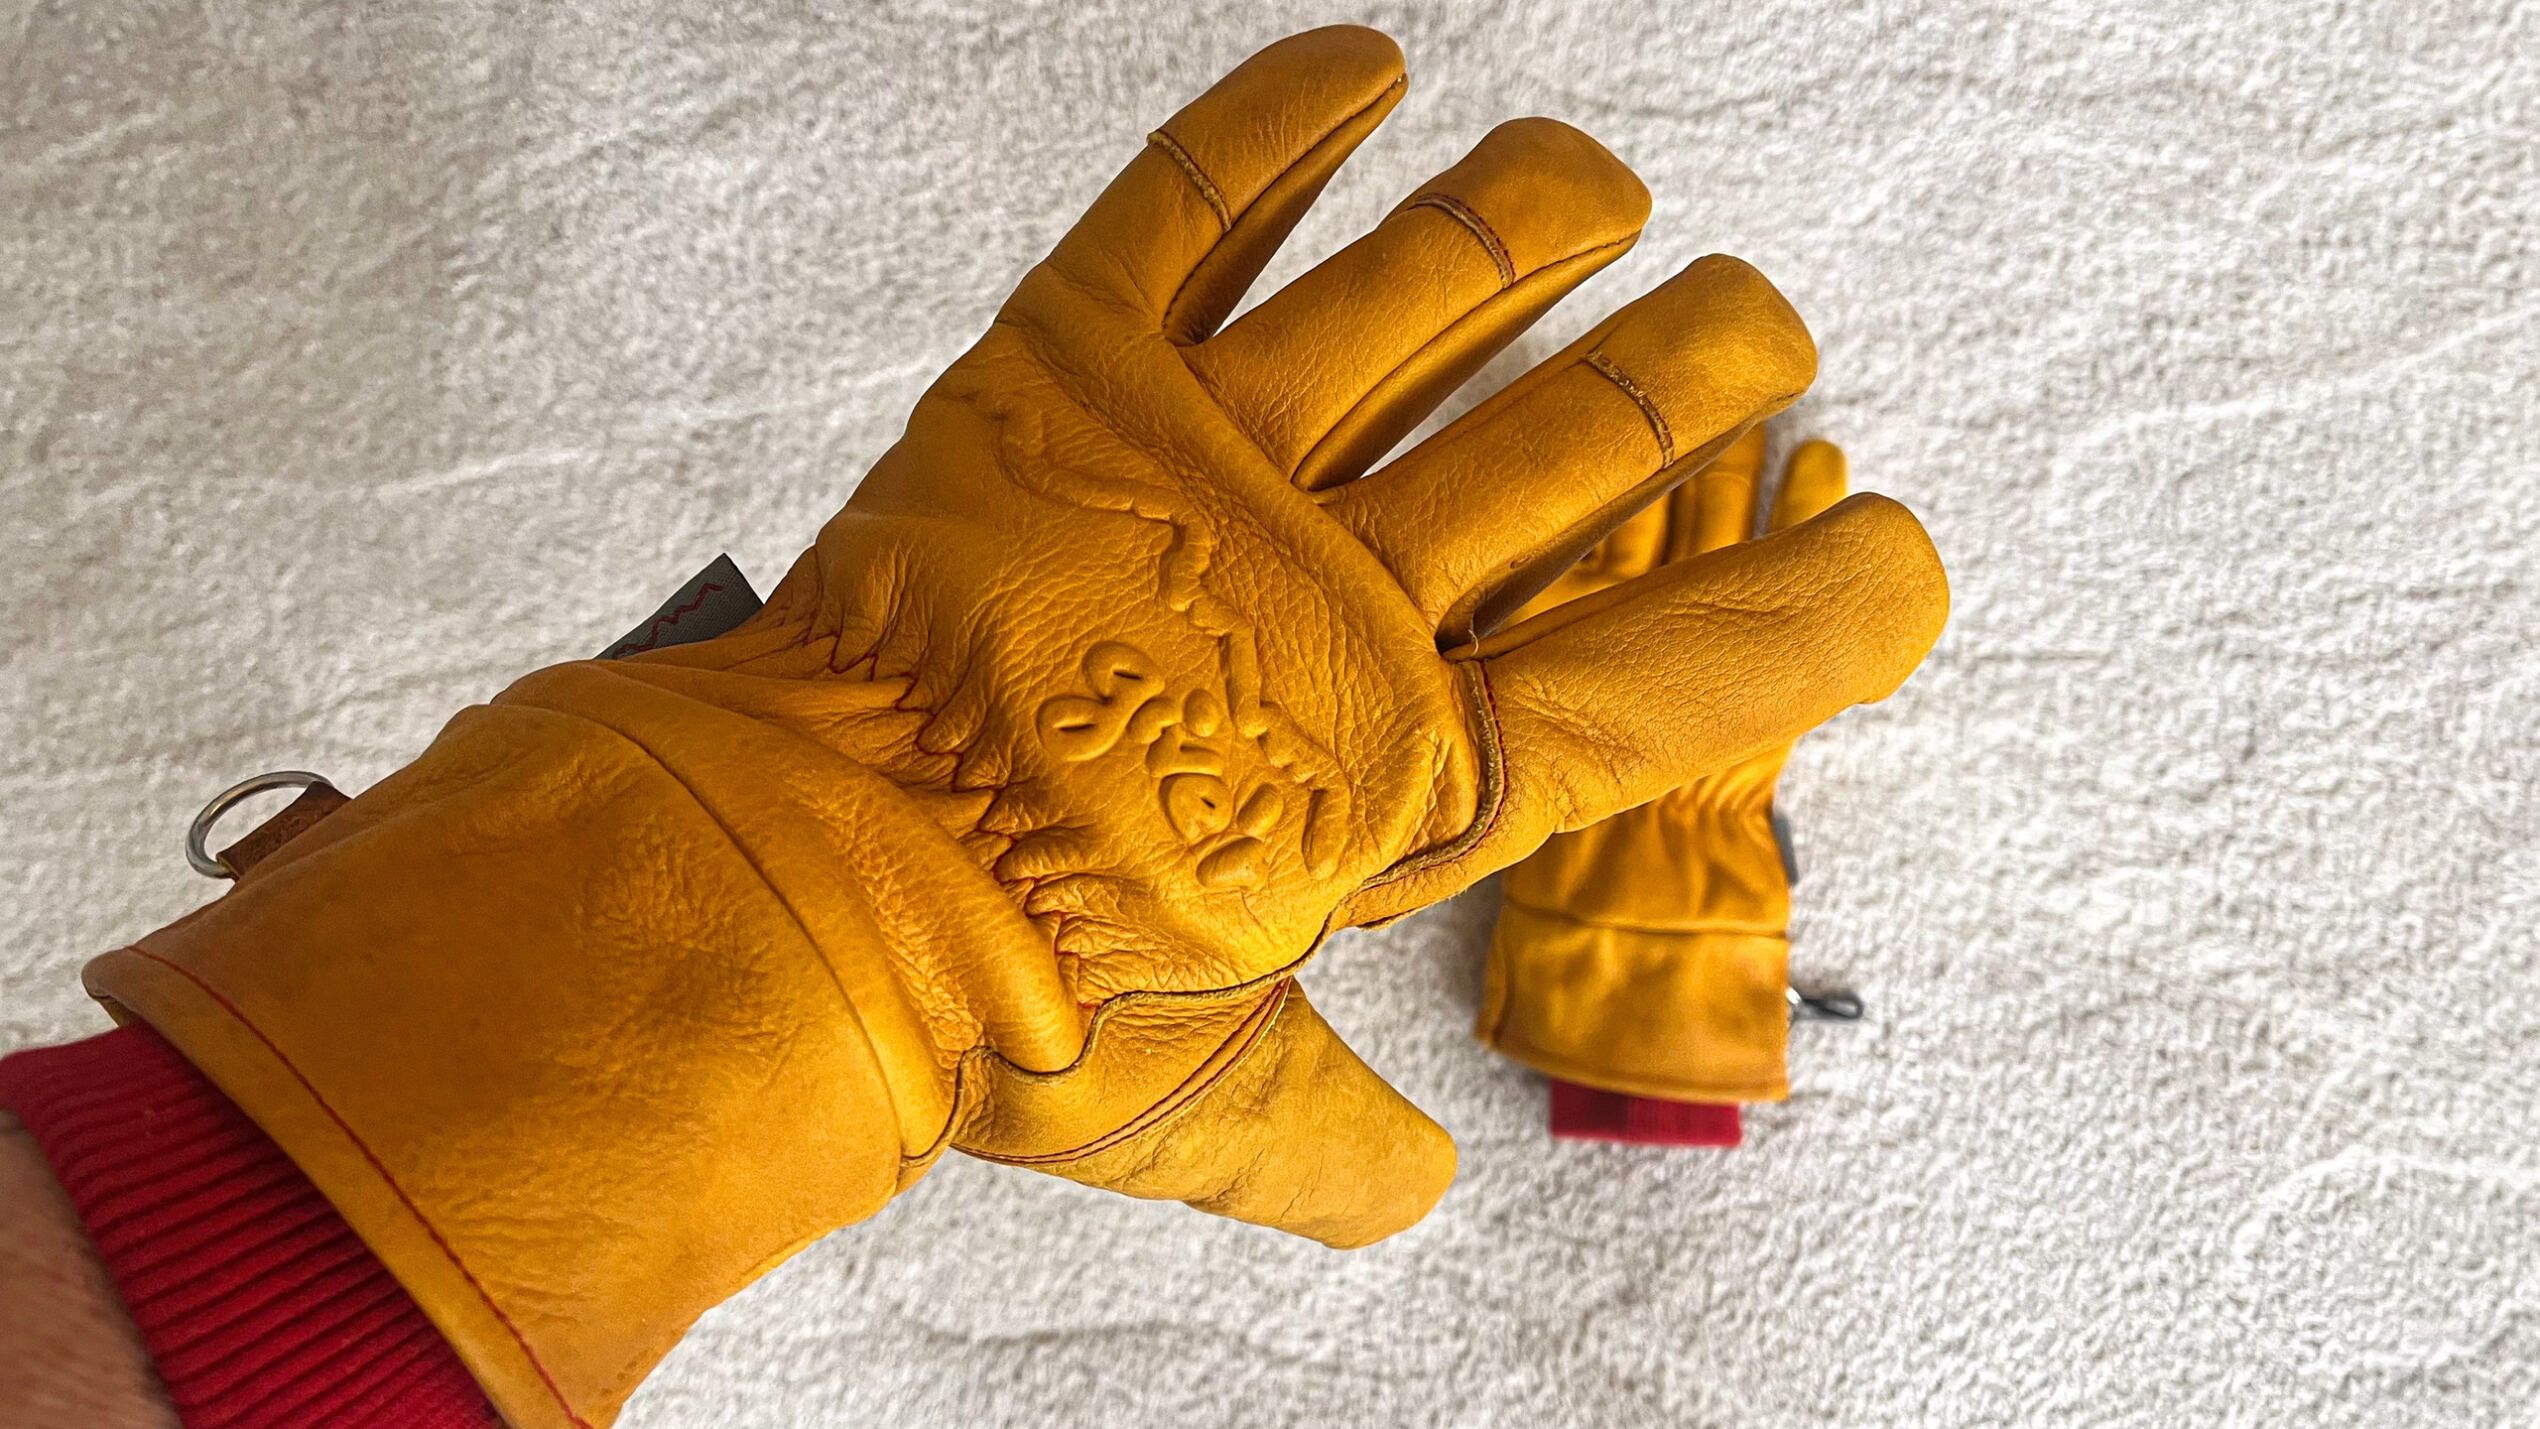 https://media.cnn.com/api/v1/images/stellar/prod/best-ski-gloves-overall-give-r-4-season-gloves.jpeg?c=original